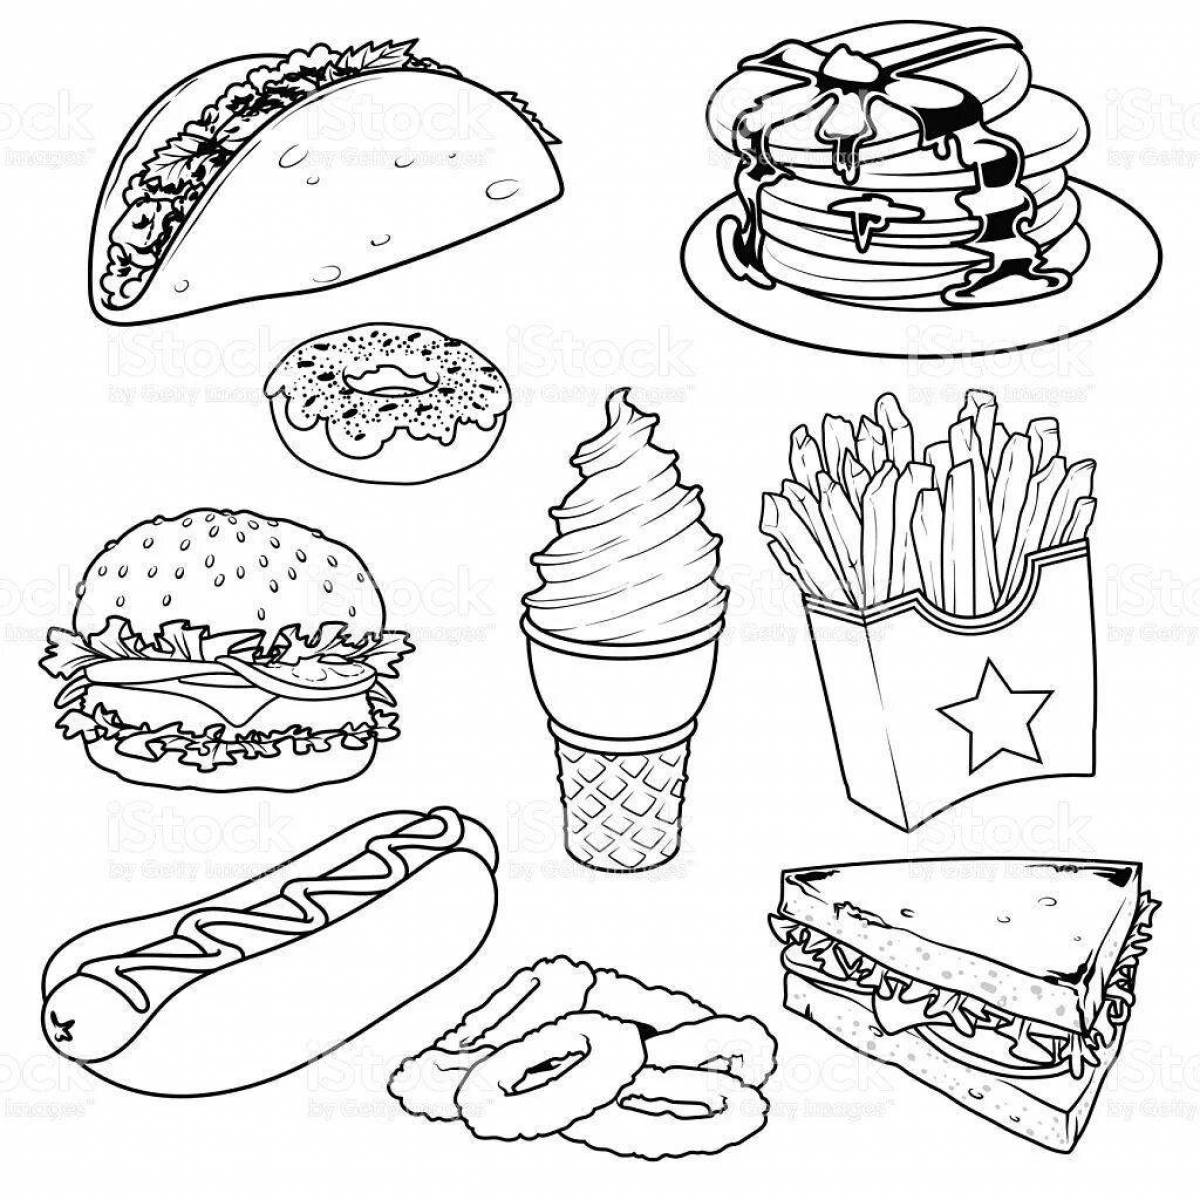 Mcdonald's delicious food coloring page